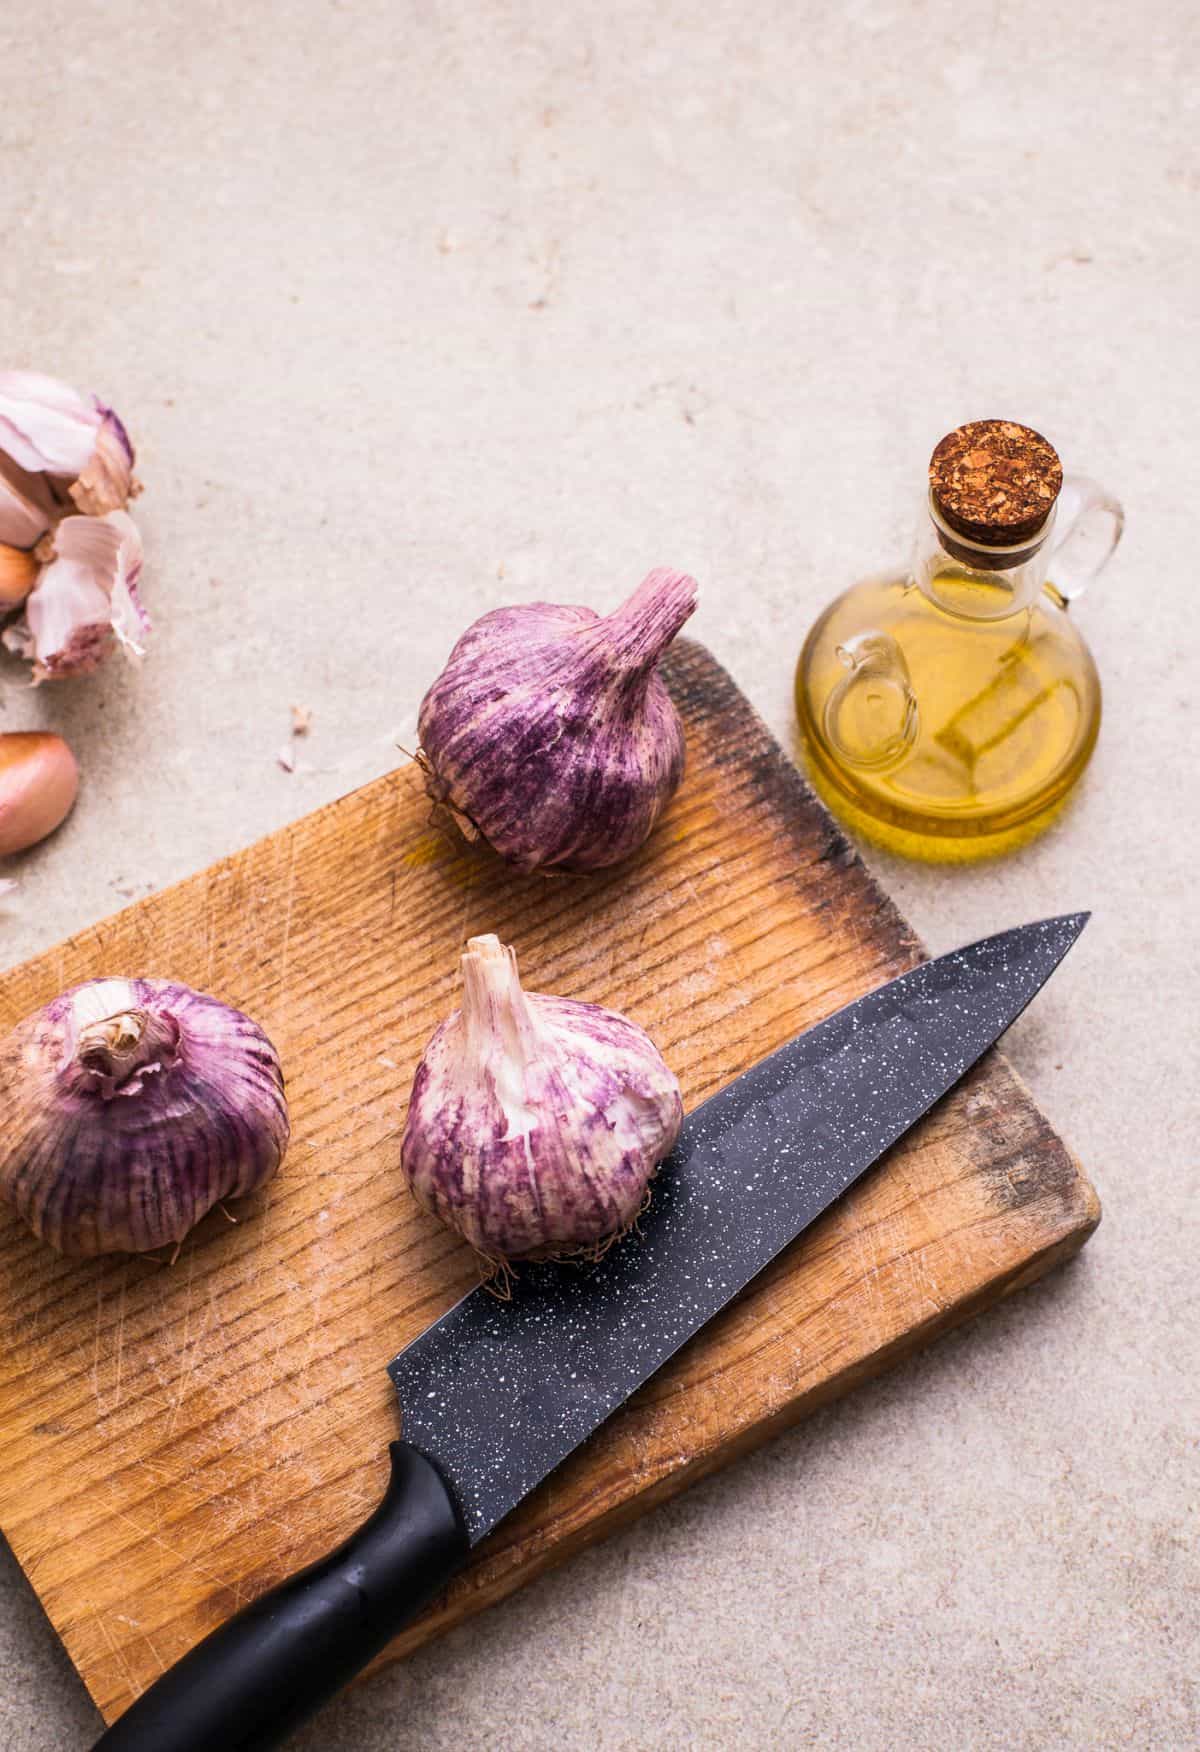 Roasted garlic step 1